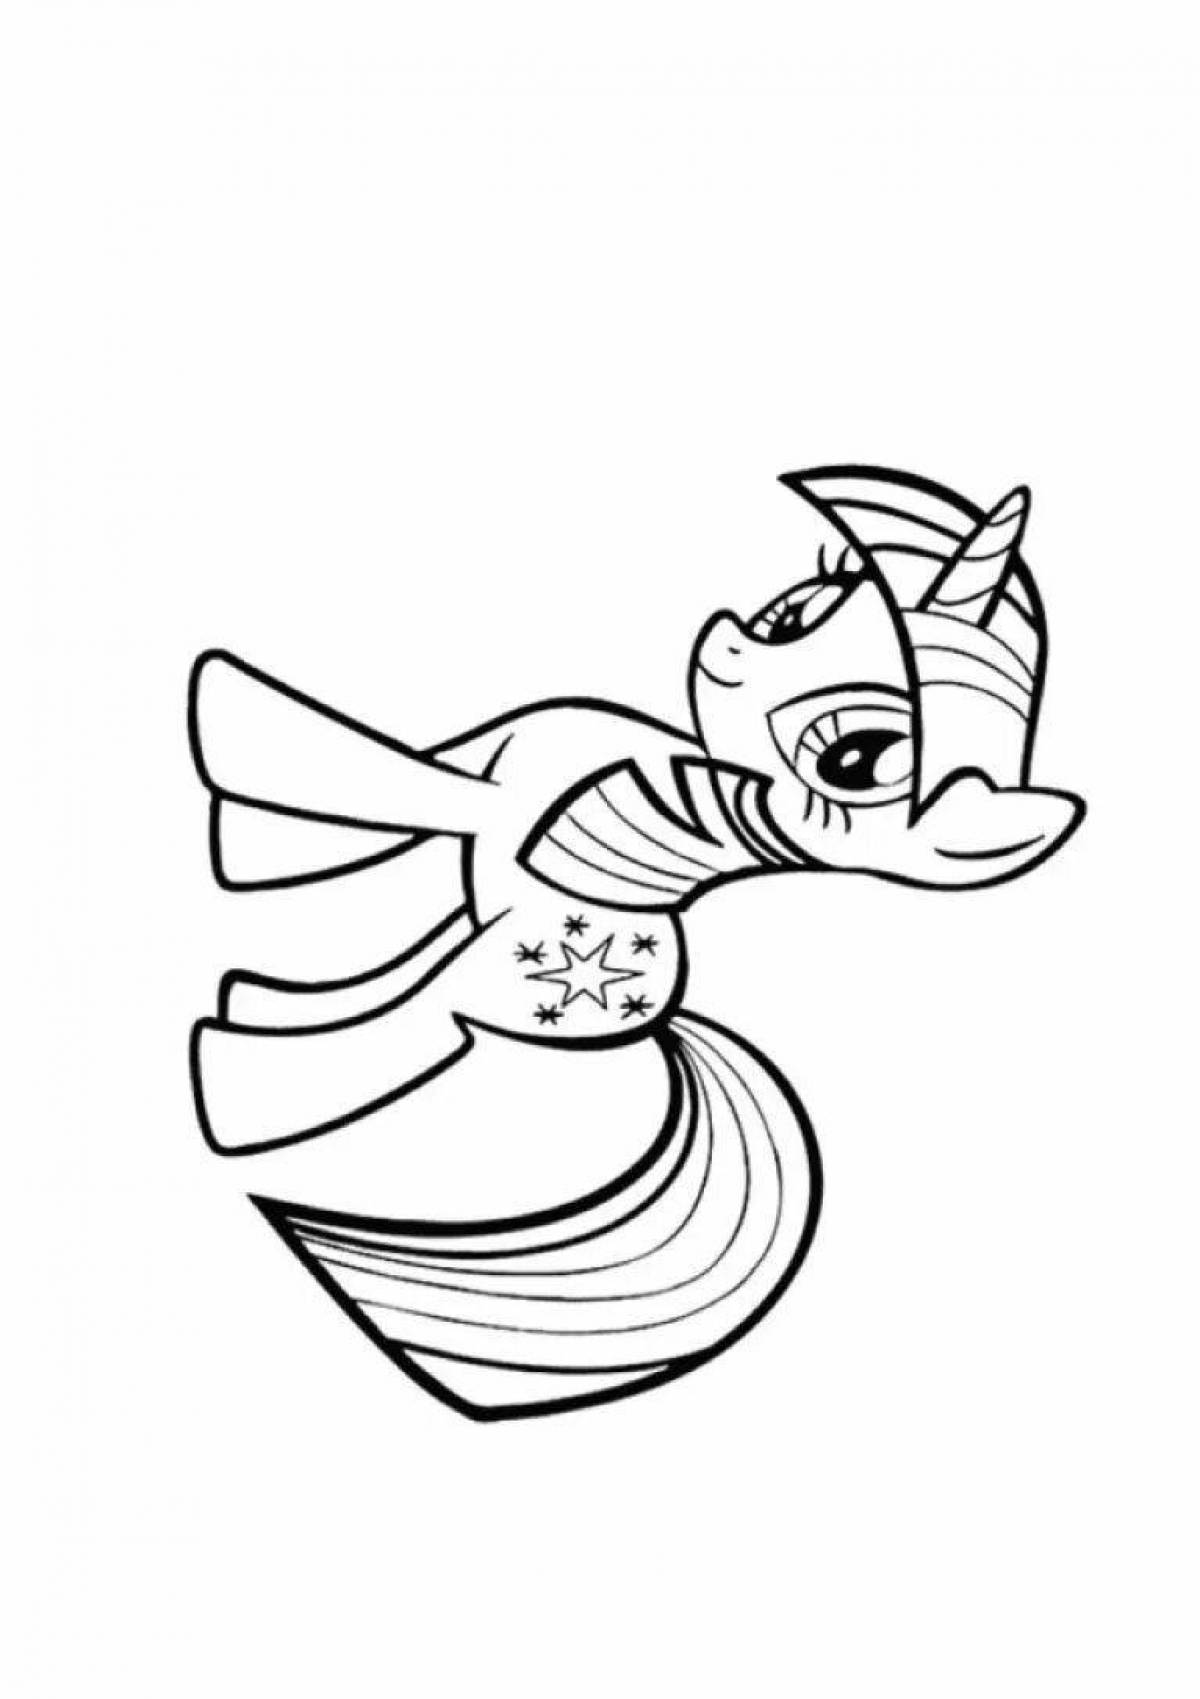 Wonderful coloring malital pony mermaid